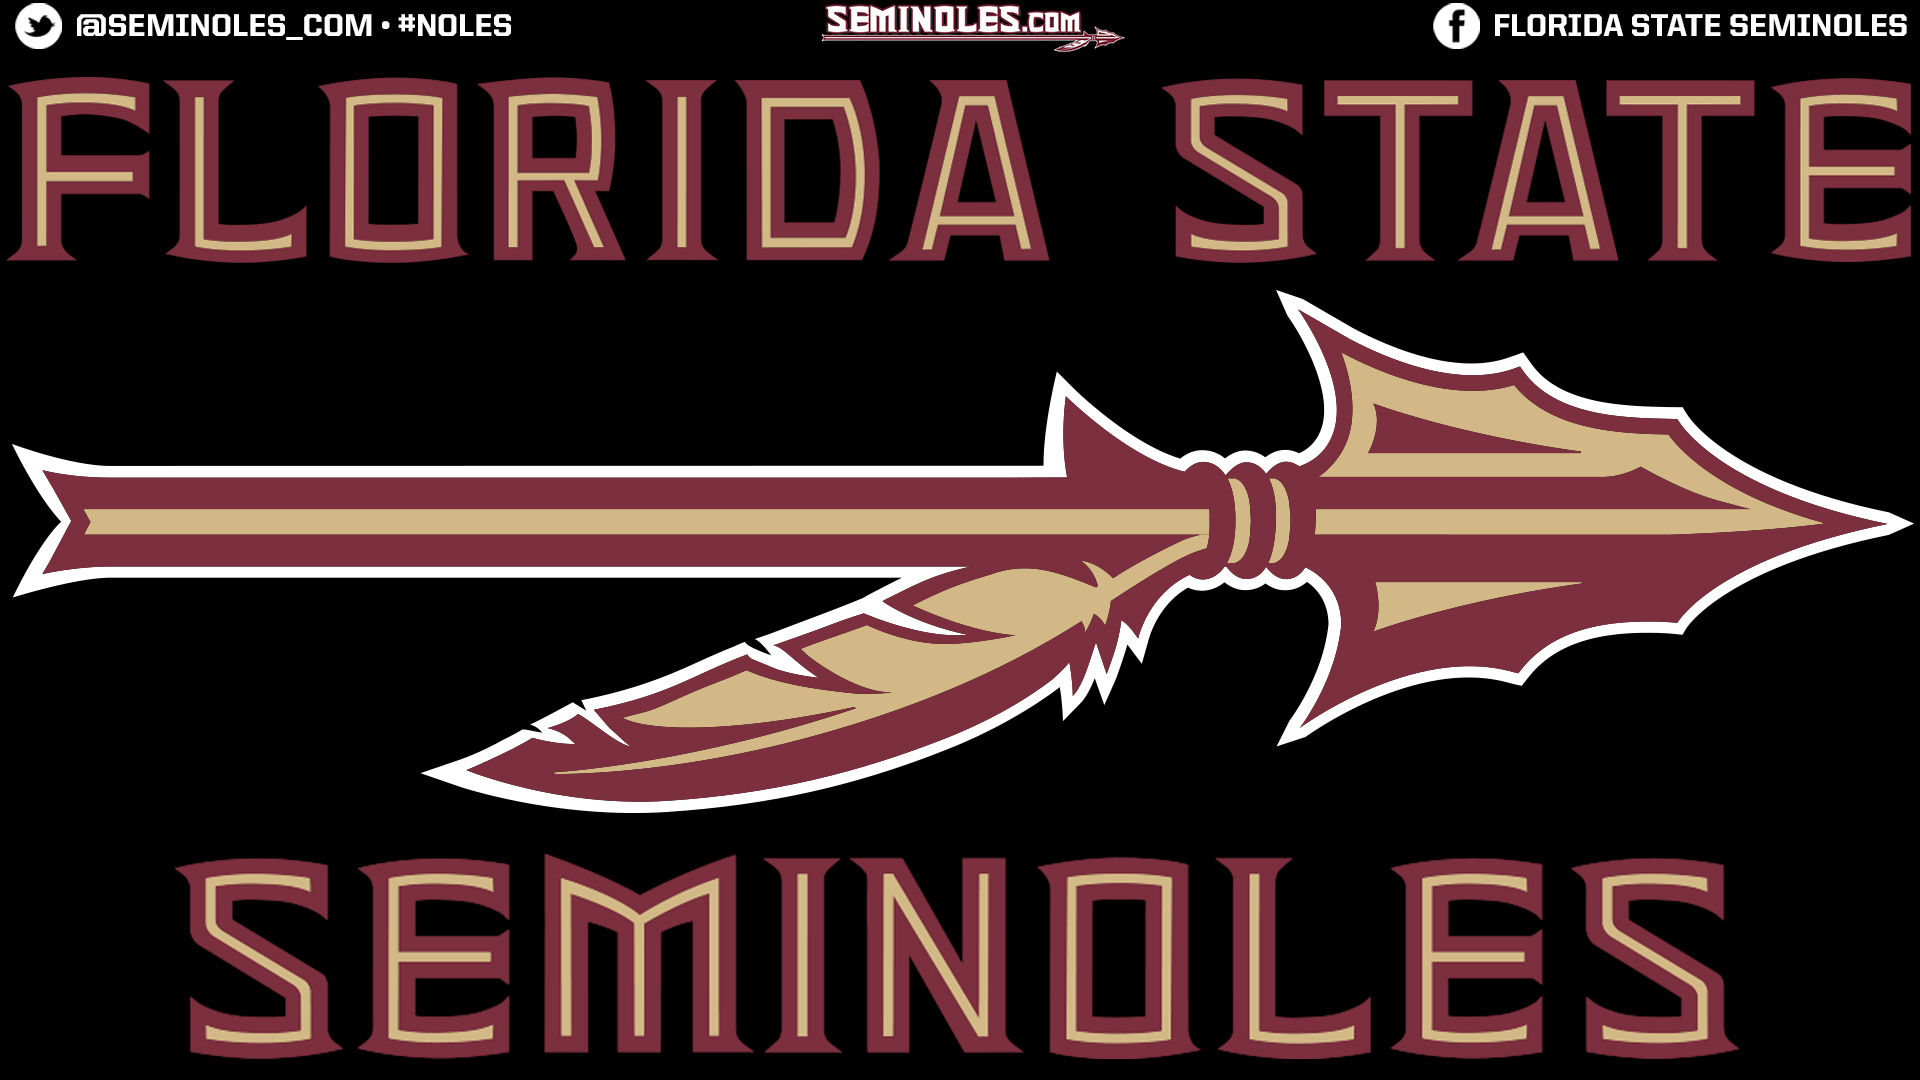 SEMINOLES.COM DESKTOP WALLPAPERS - Florida State Seminoles ...